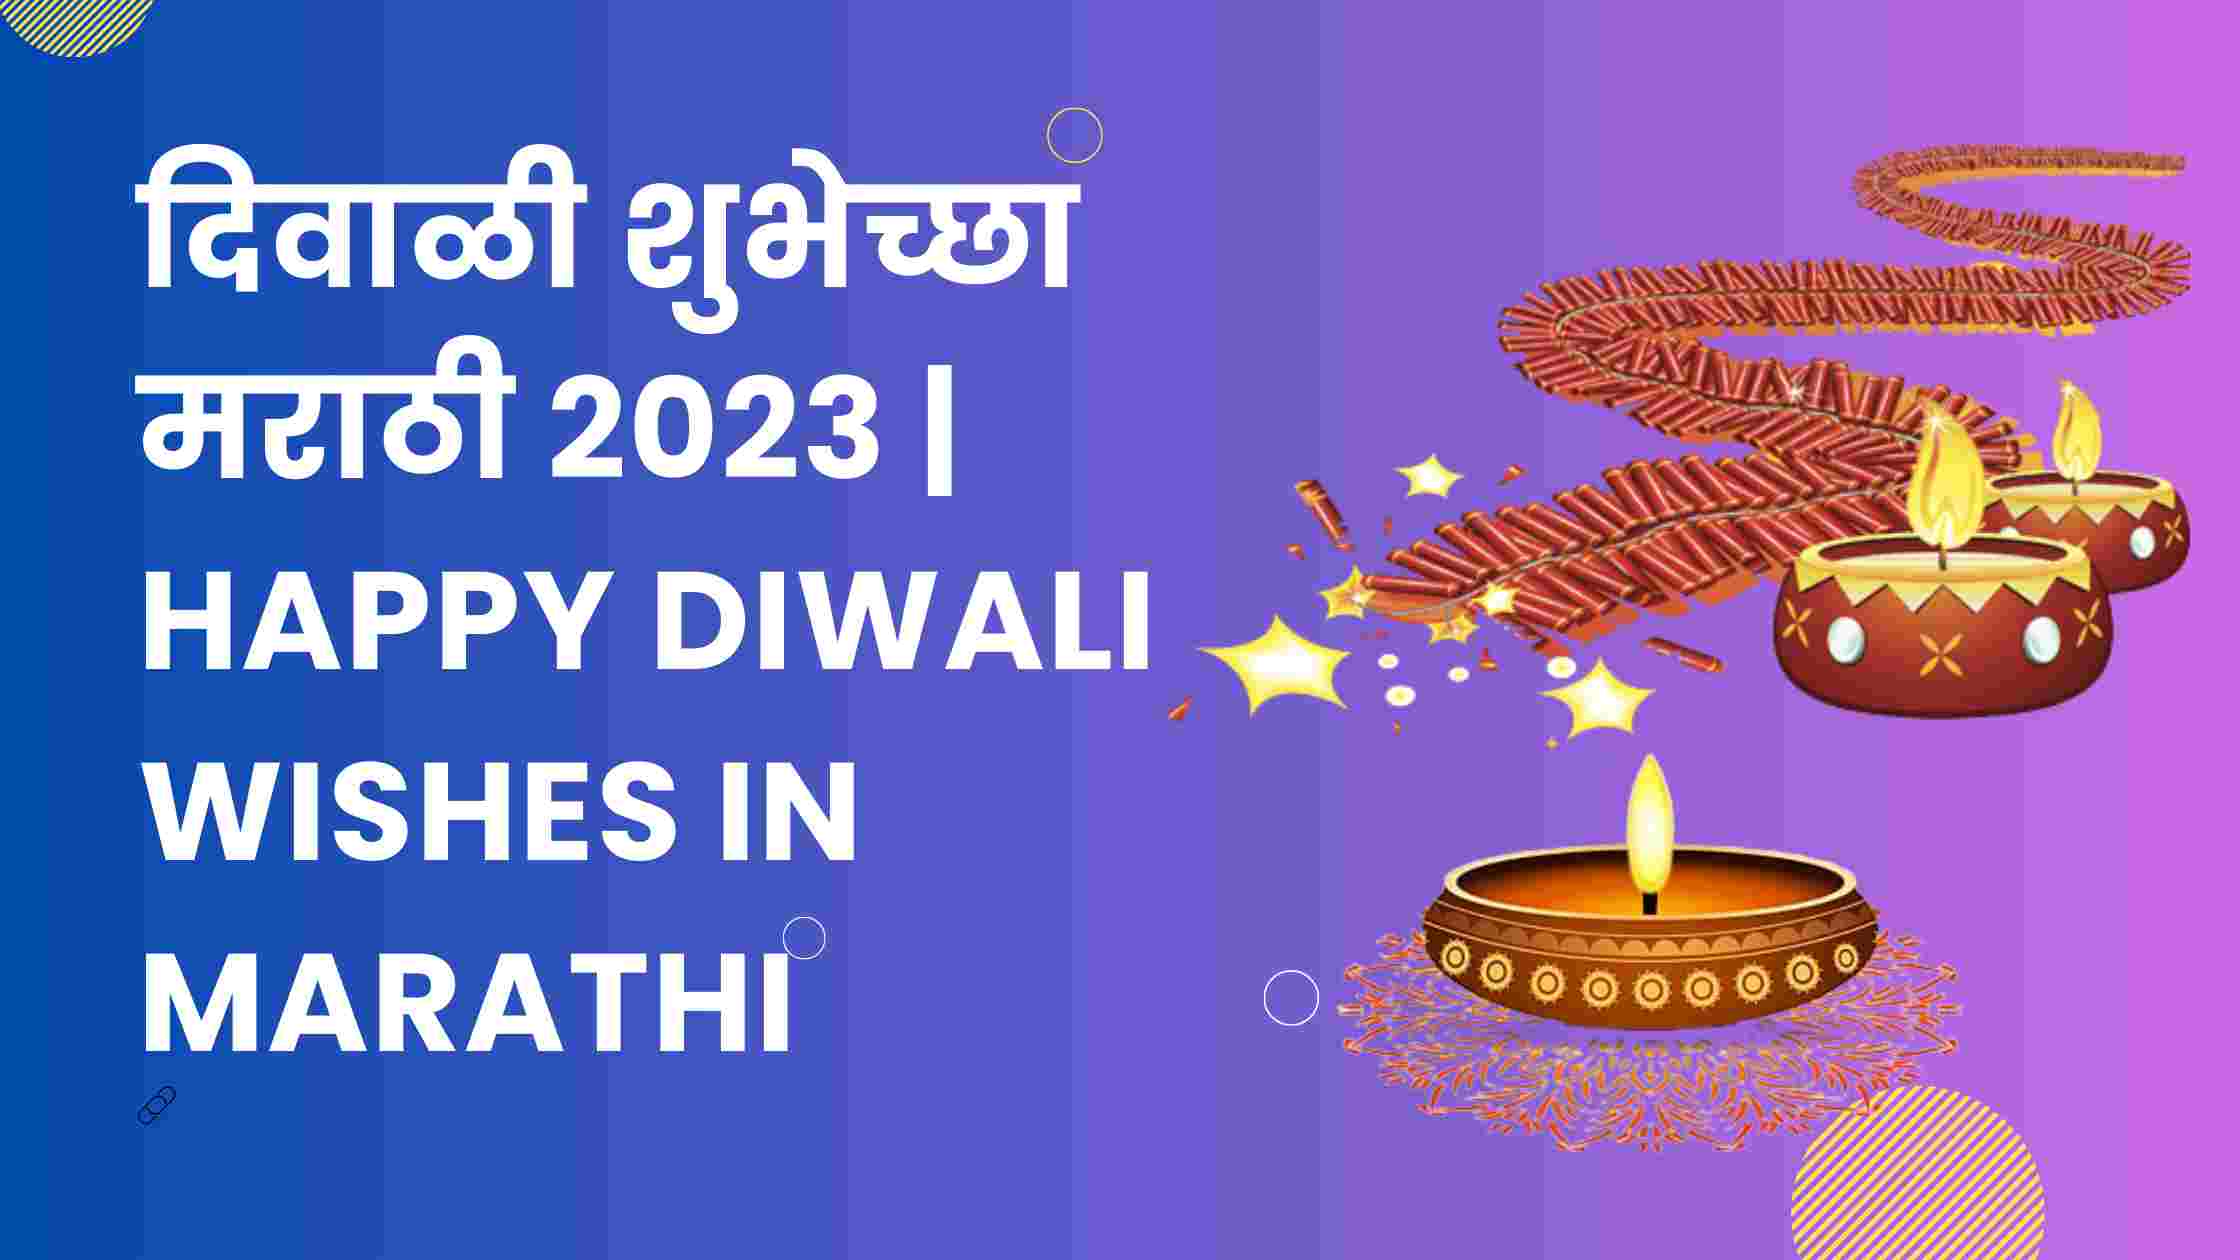 दिवाळी शुभेच्छा मराठी 2023 Happy Diwali Wishes In Marathi -compressed